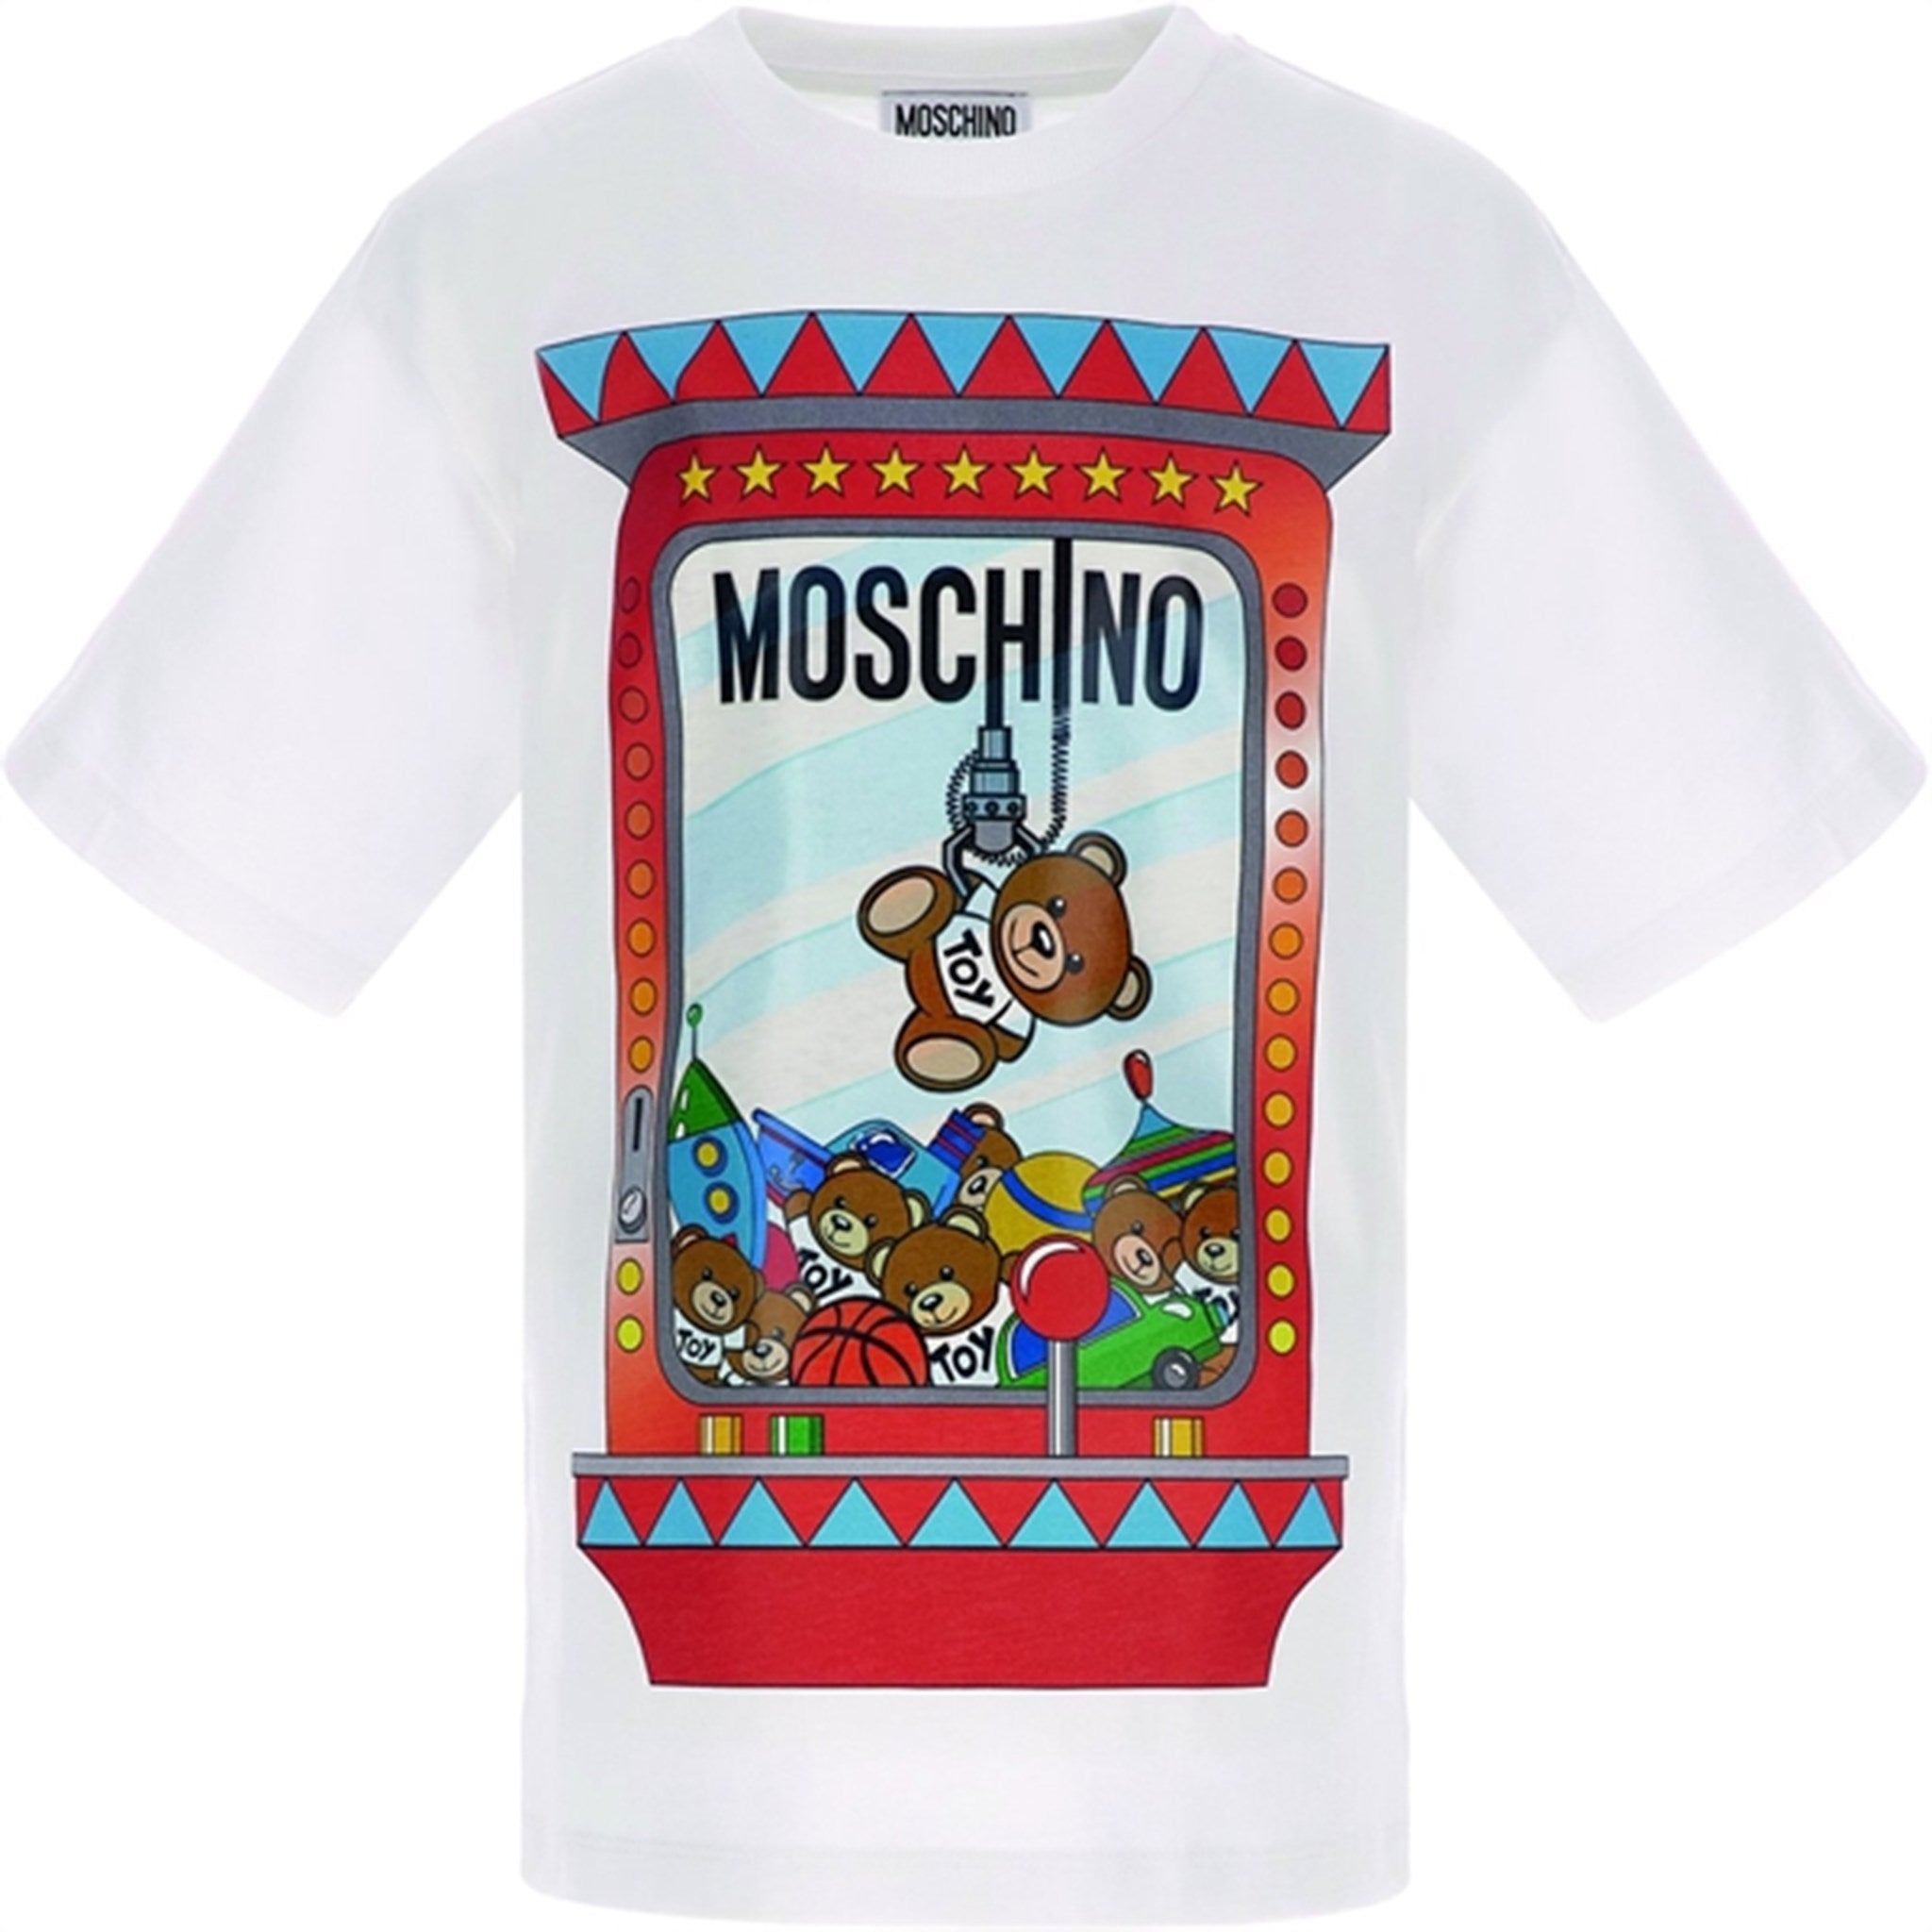 Moschino Optical White T-Shirt Maxi